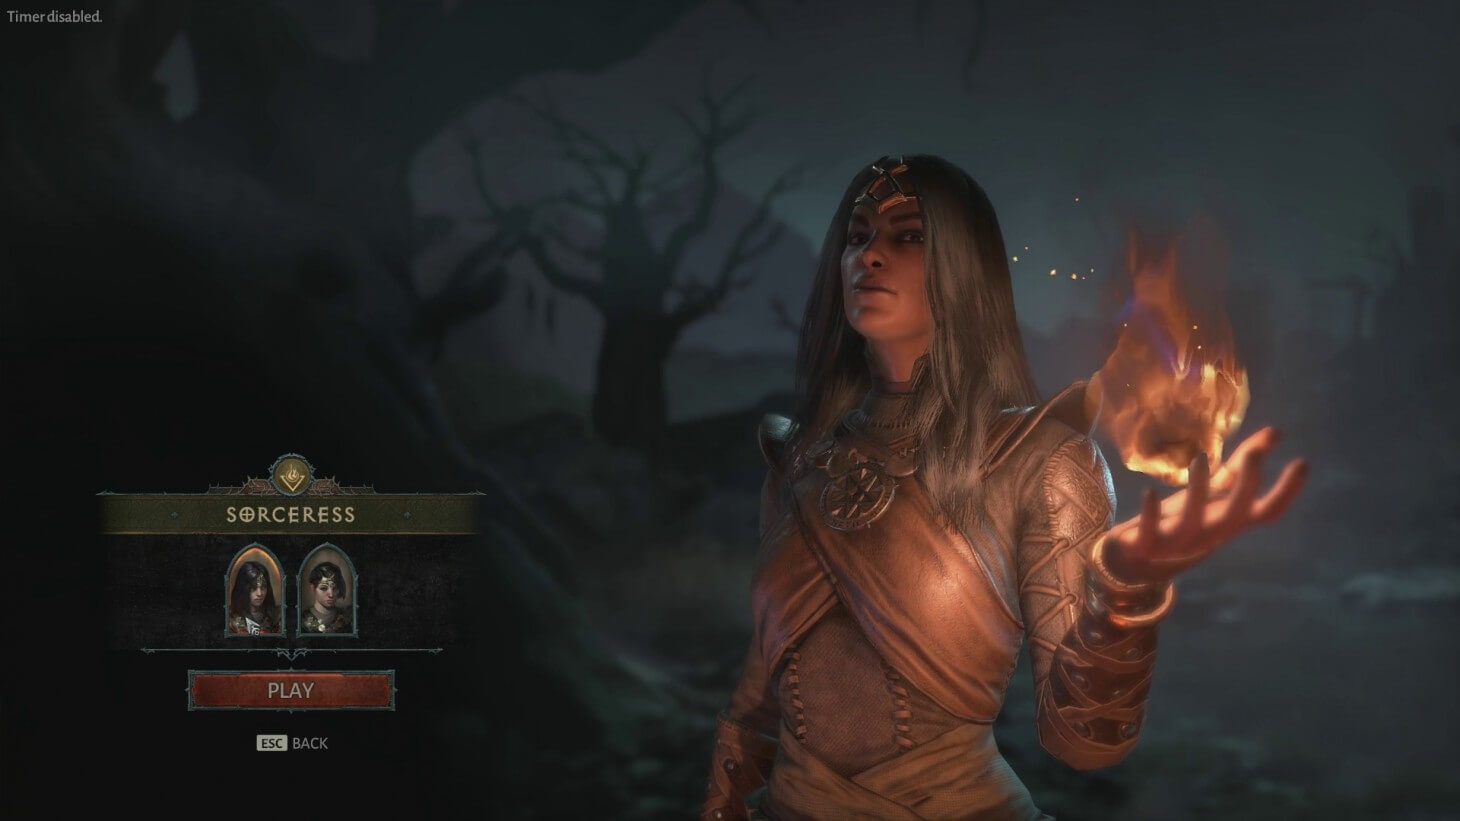 Diablo IV Sorceress